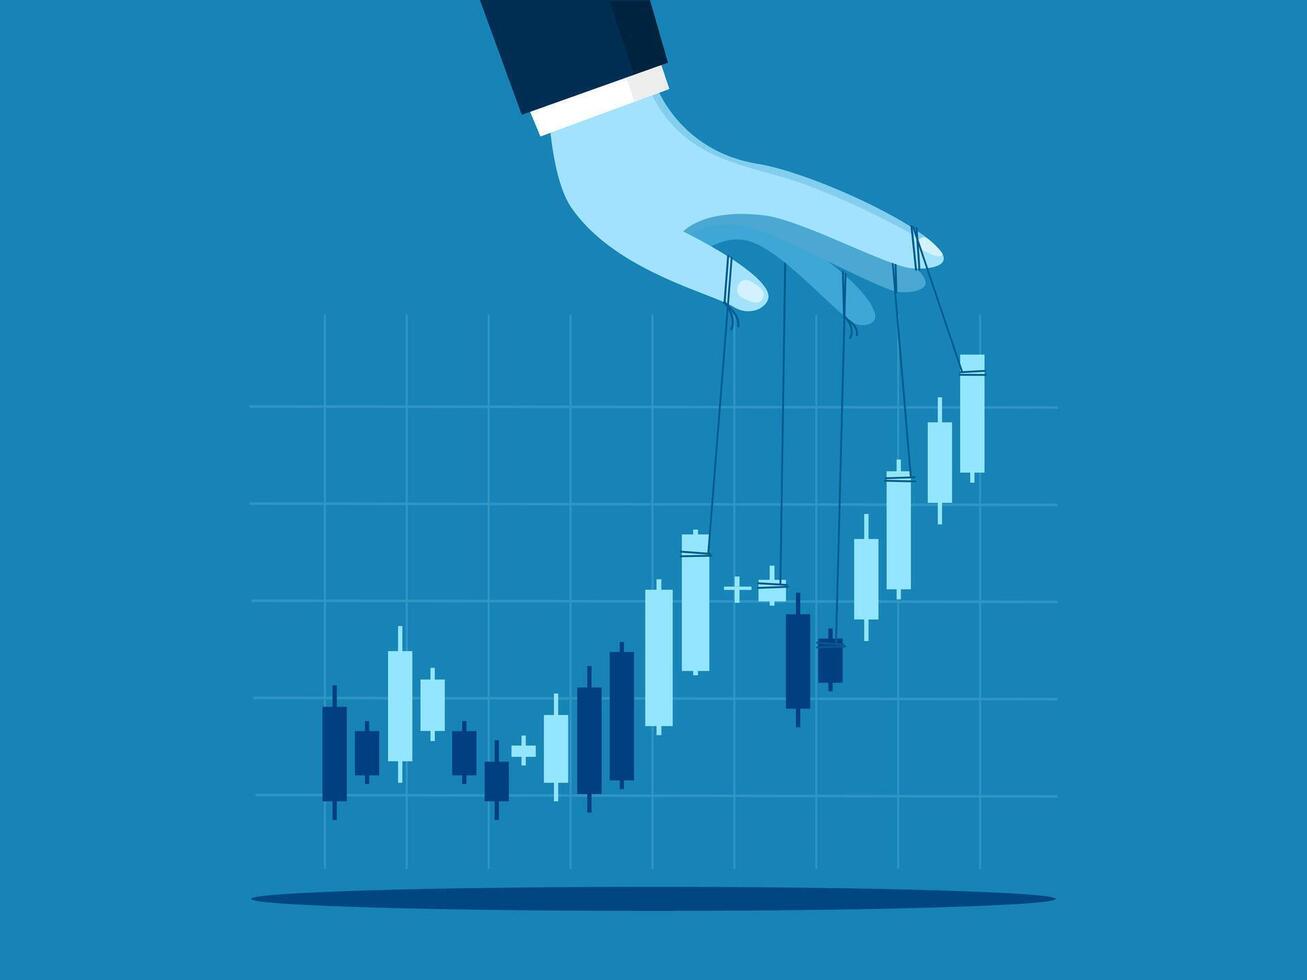 Dominate stock chart. Powerful businessman manipulating stock graphs vector